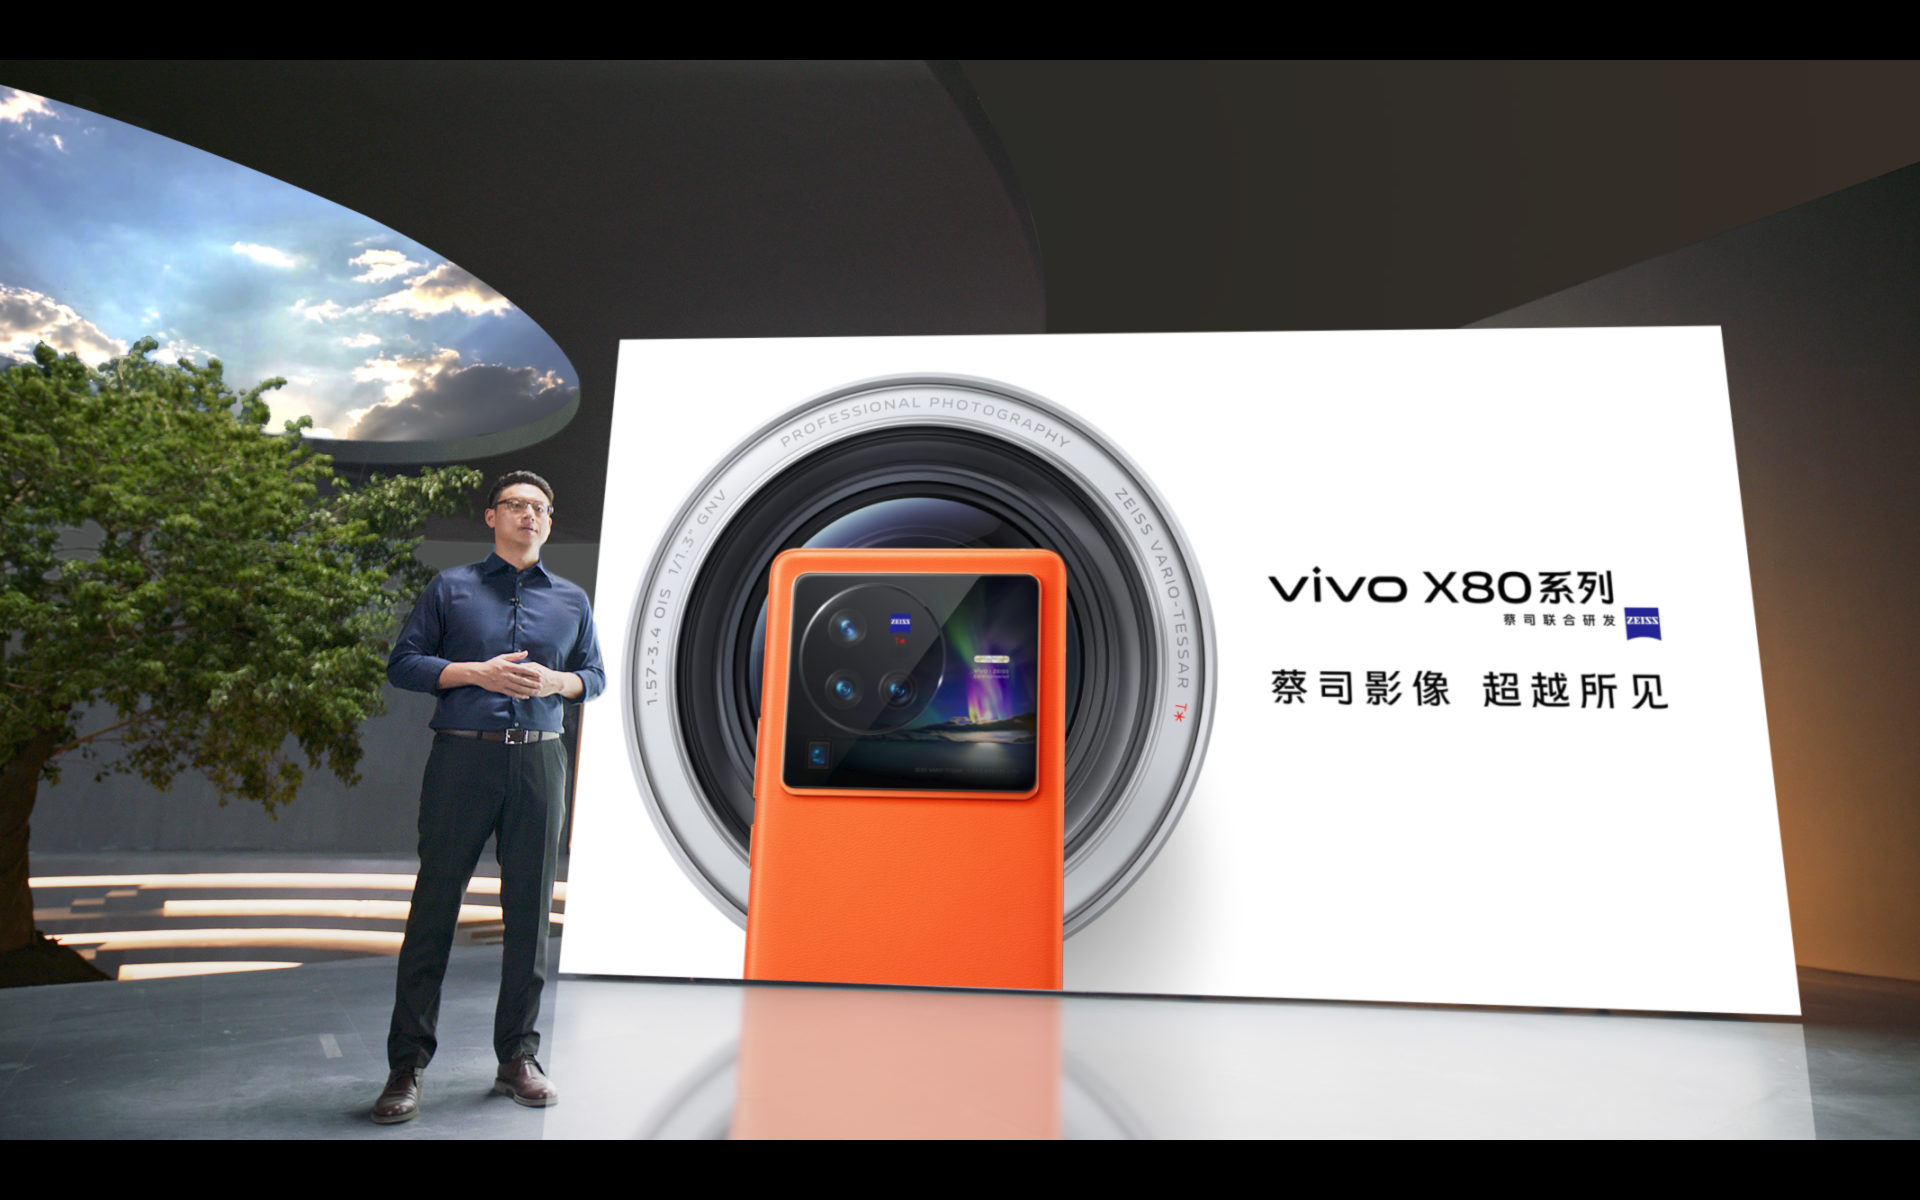 vivo x80|vivo X80 Pro正式发布，全面出彩持续释放魅力